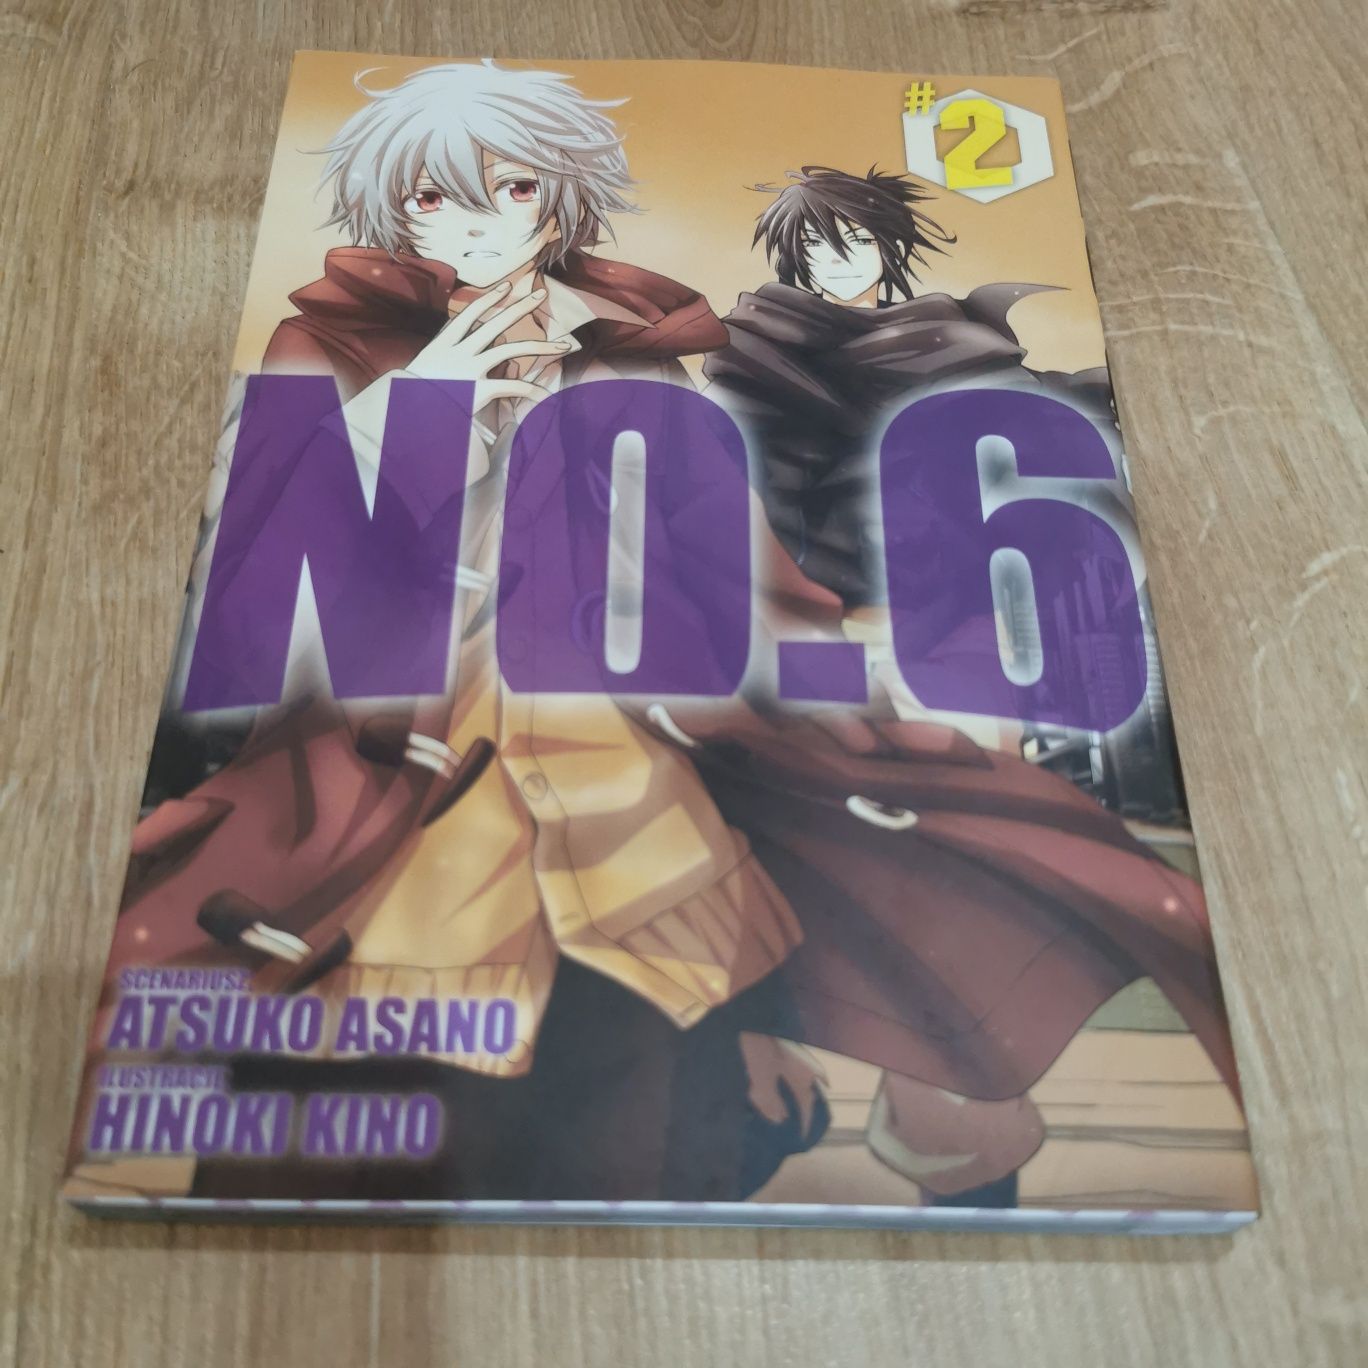 Nowa manga. No. 6 #2